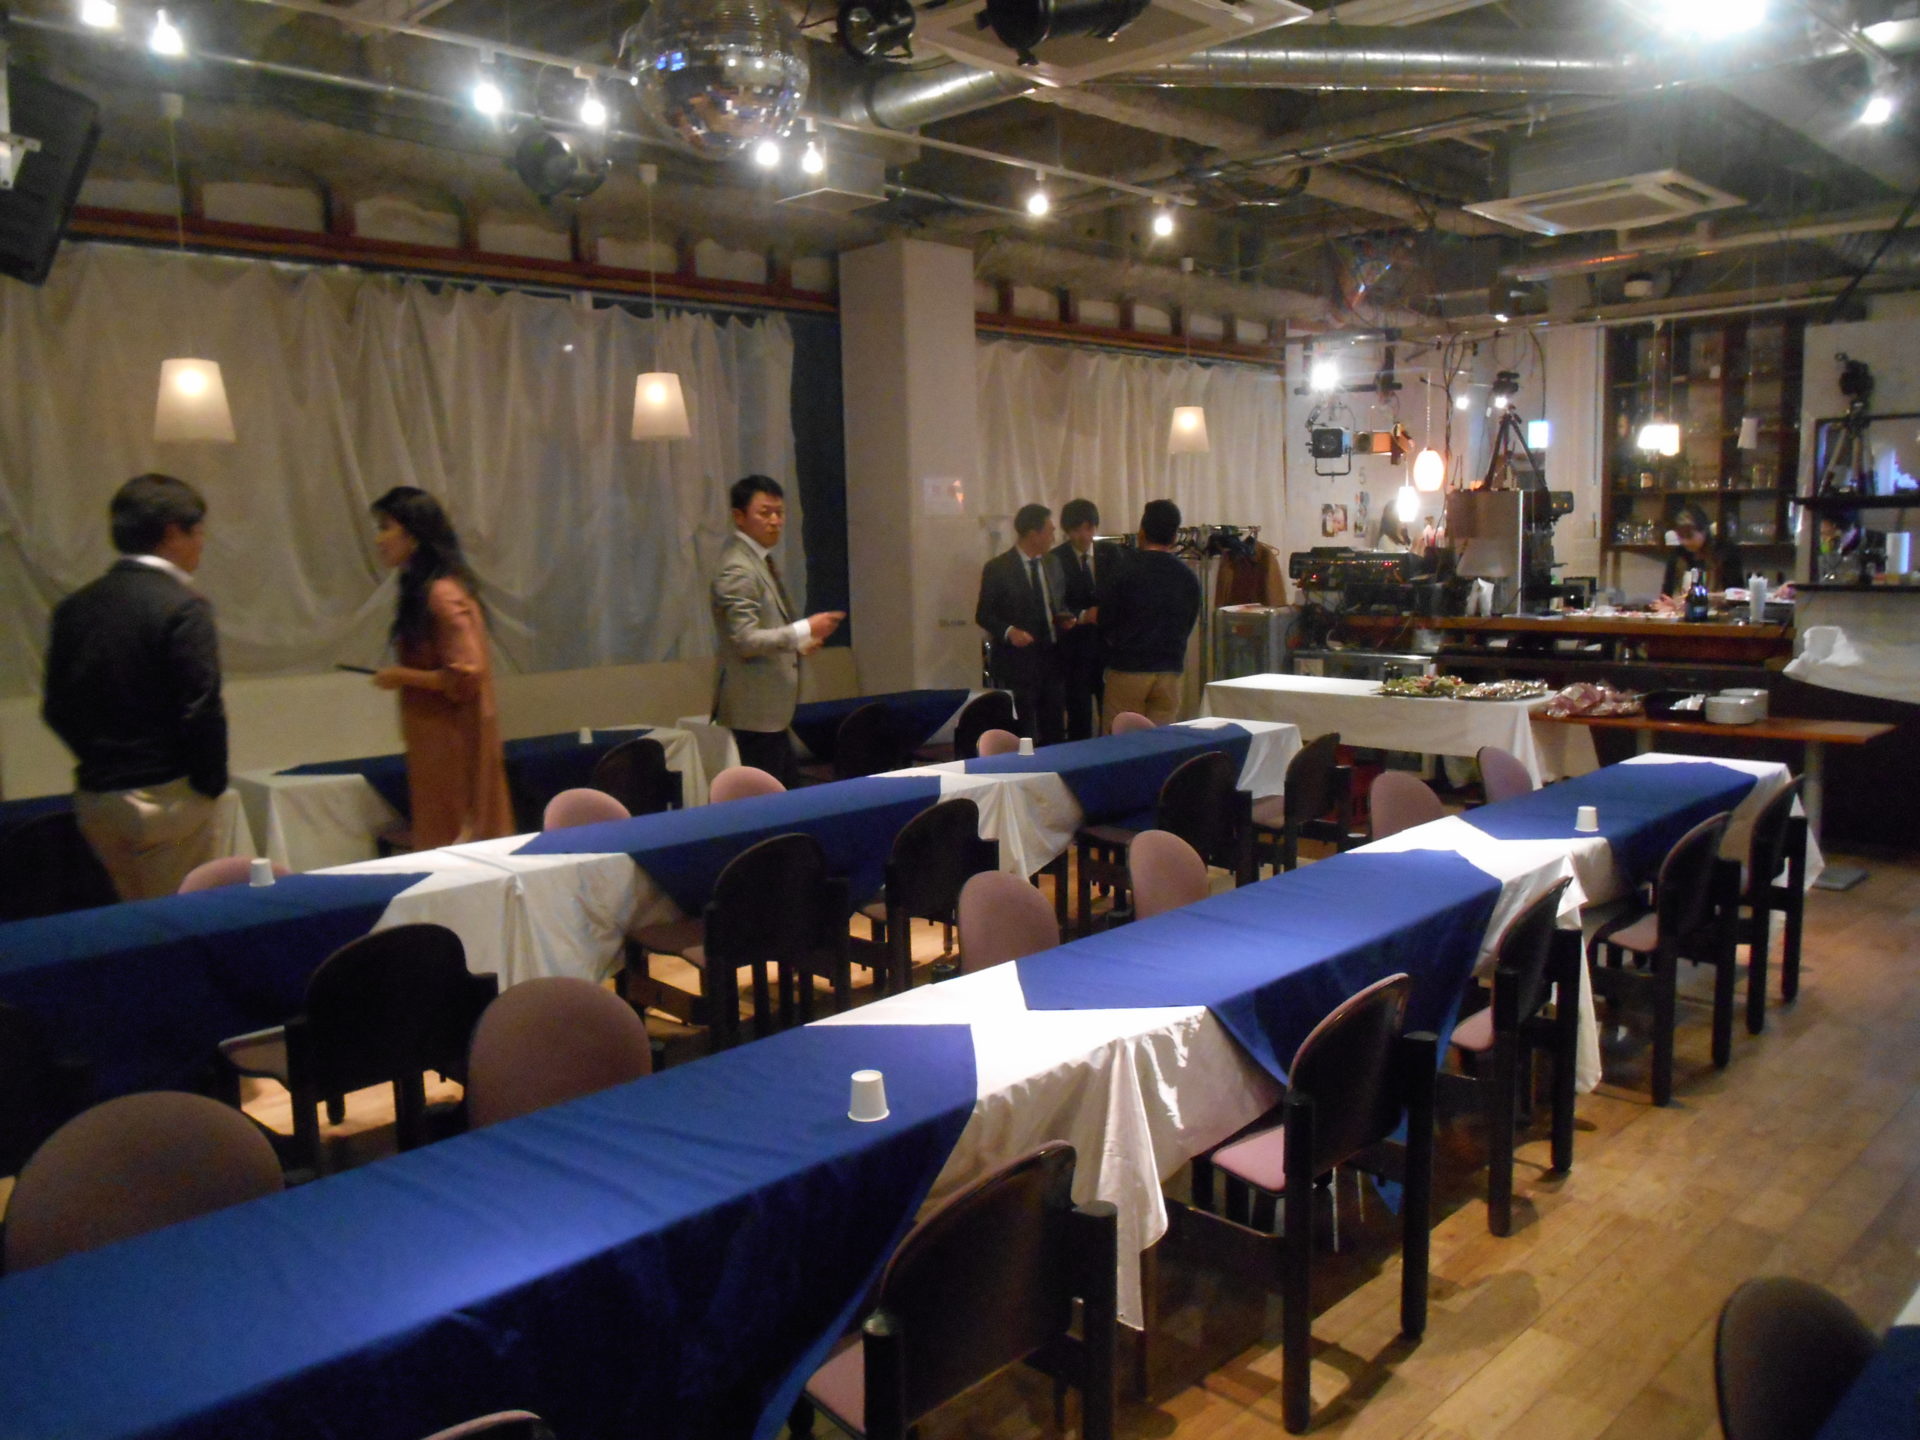 DSCN1011 1920x1440 - 2016年3月11日（金)AOsuki総会&パーティー開催しました。